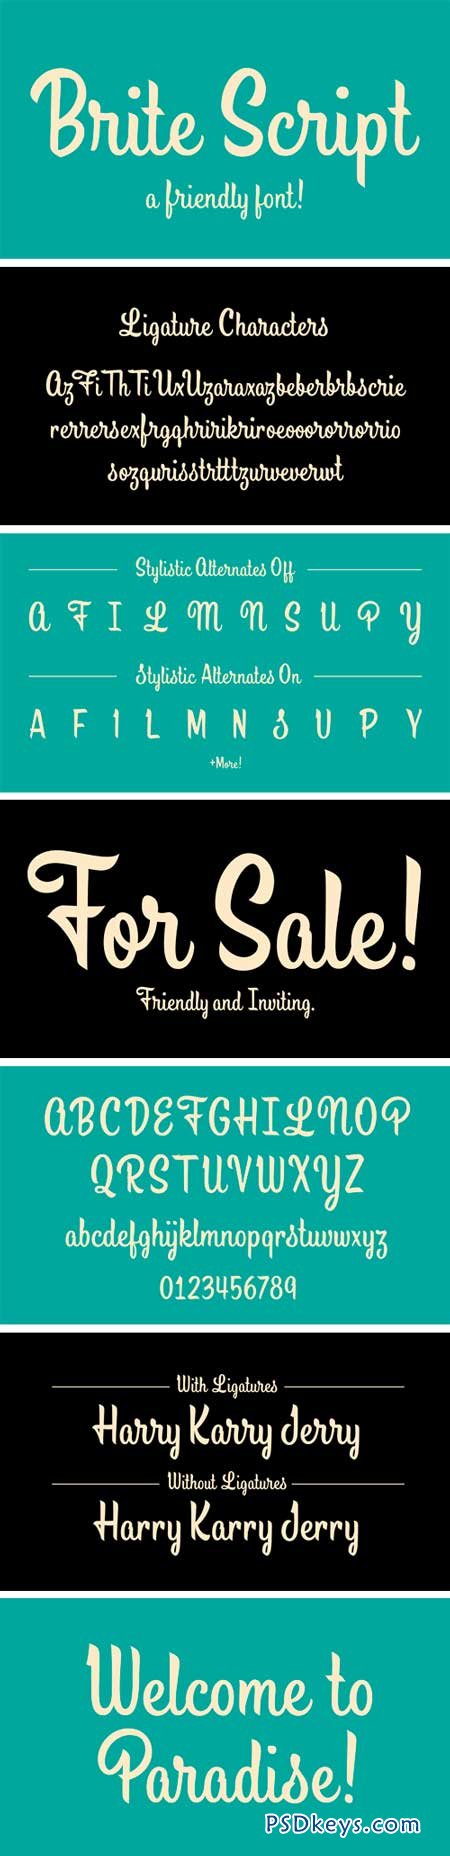 Brite Script Font for $25